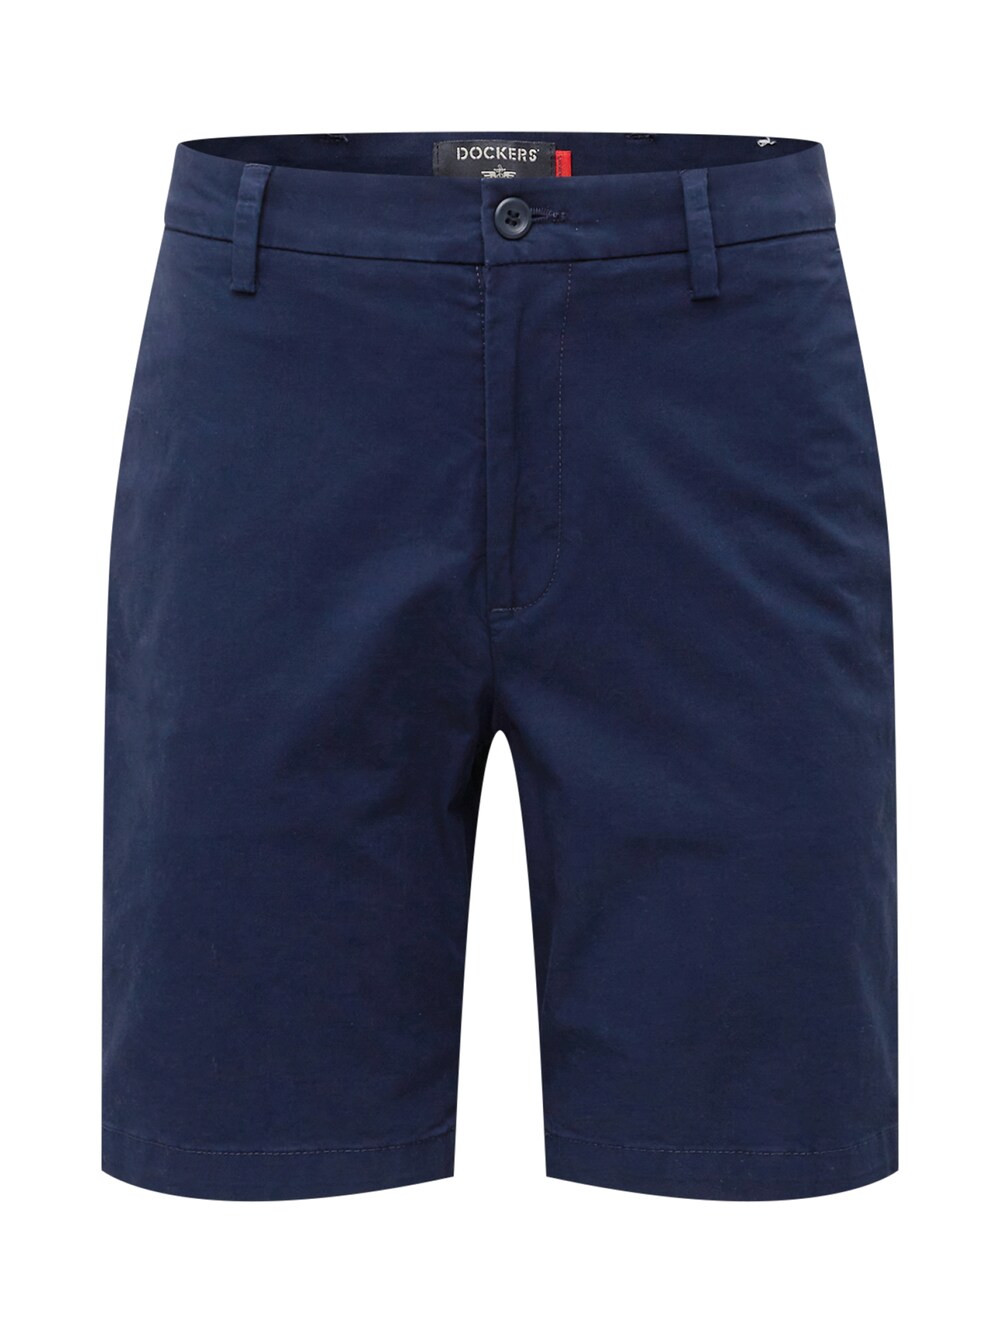 Узкие брюки-чиносы Dockers, темно-синий